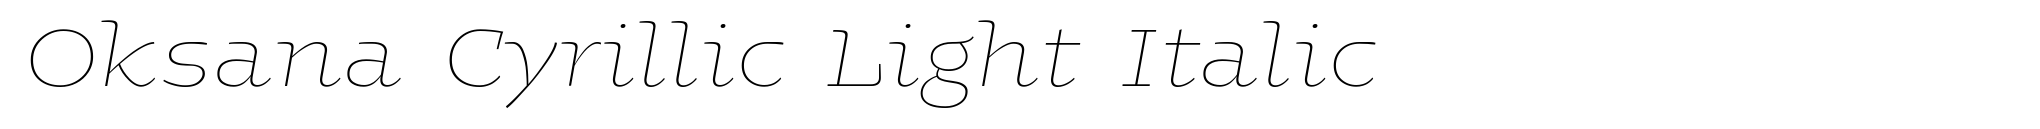 Oksana Cyrillic Light Italic image